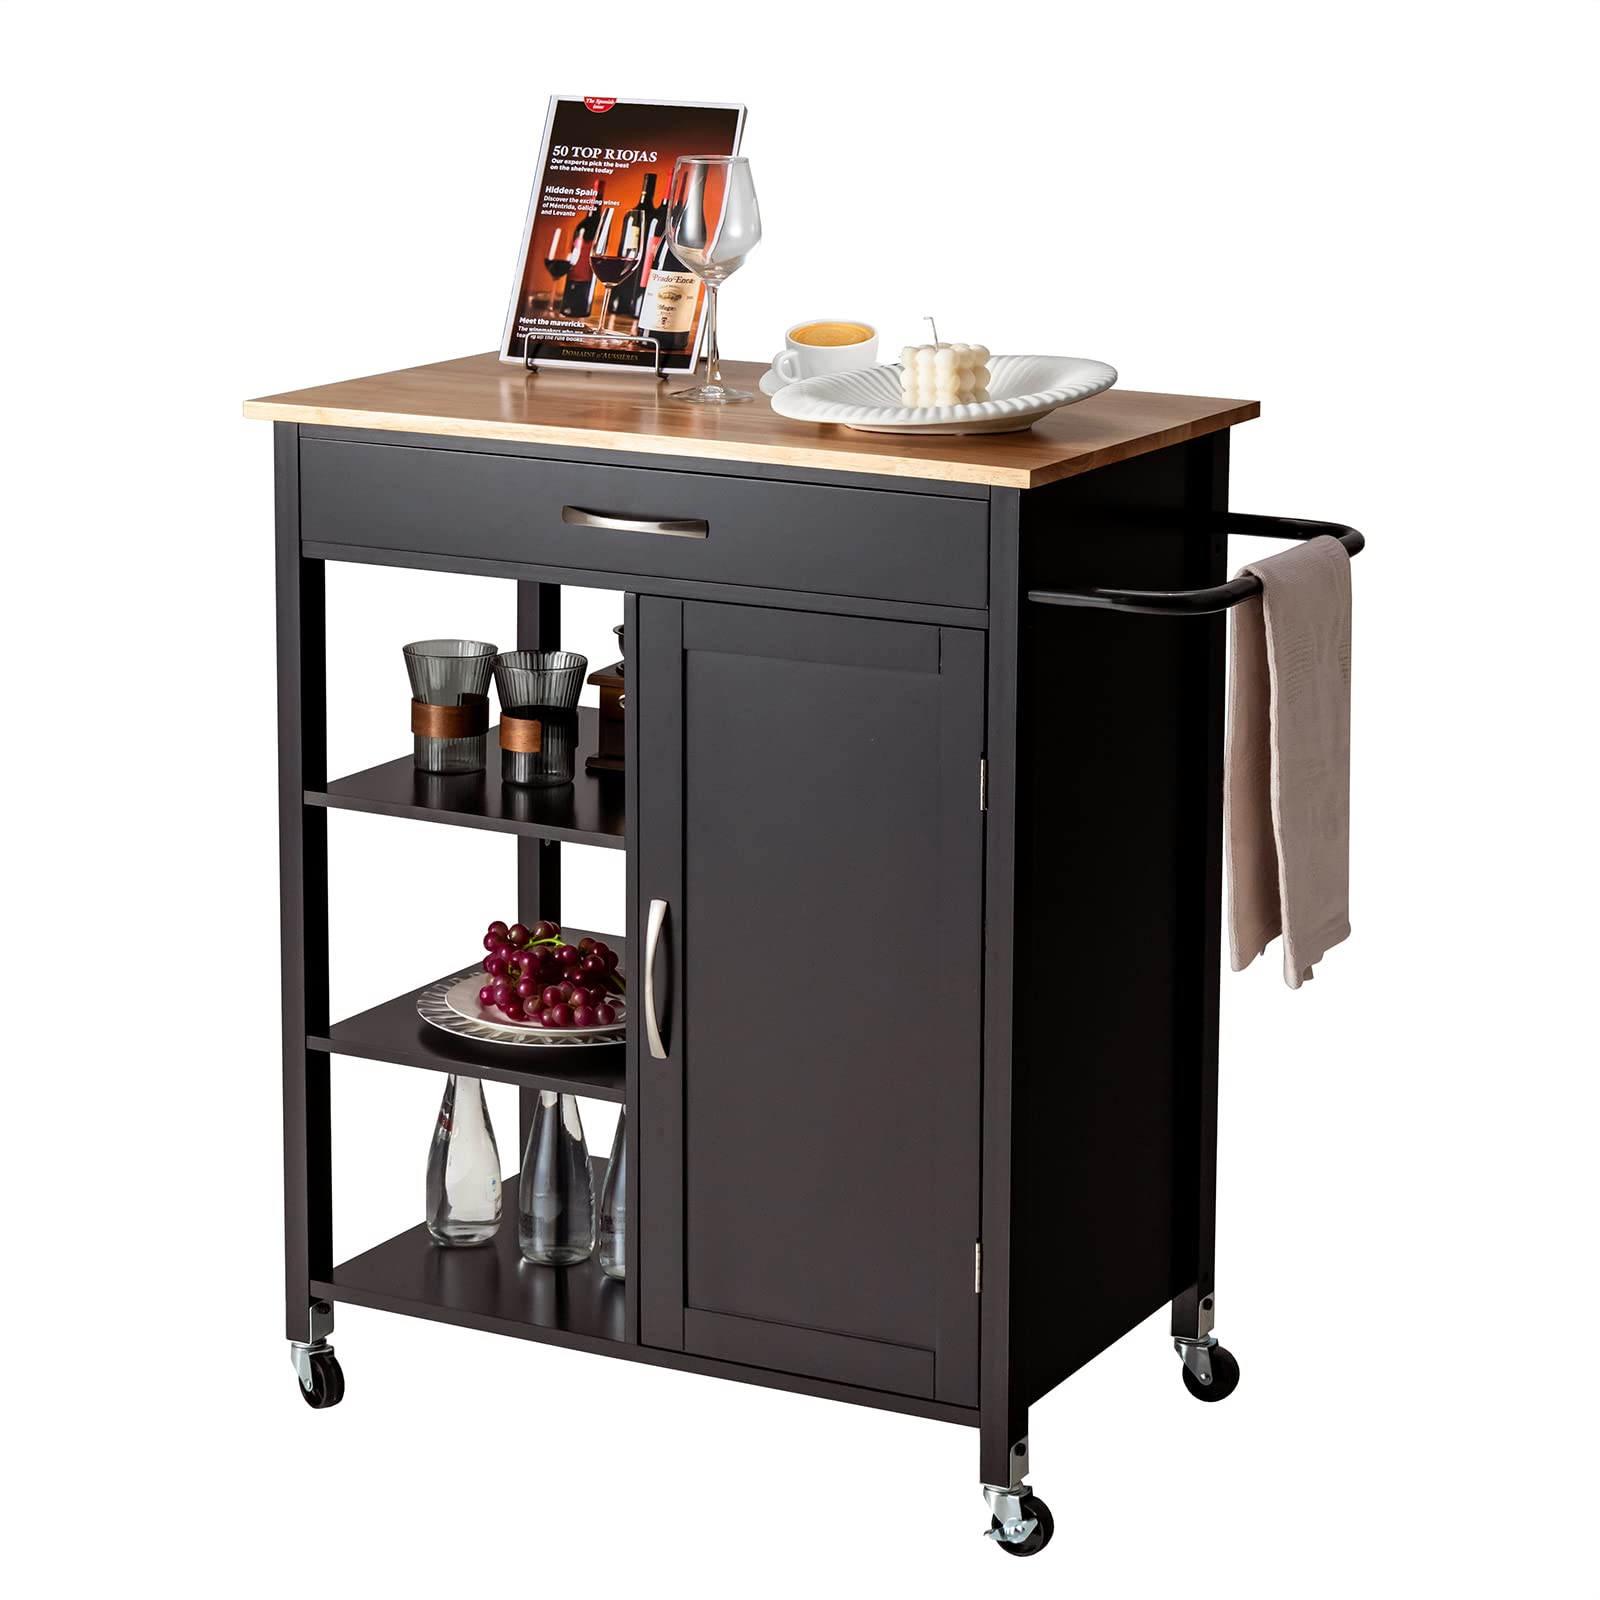 Giantex Kitchen Island - Mobile Kitchen Cart on Wheels, 1-Door Storage Cabinet, Large Drawer, 3 Tier Shelves